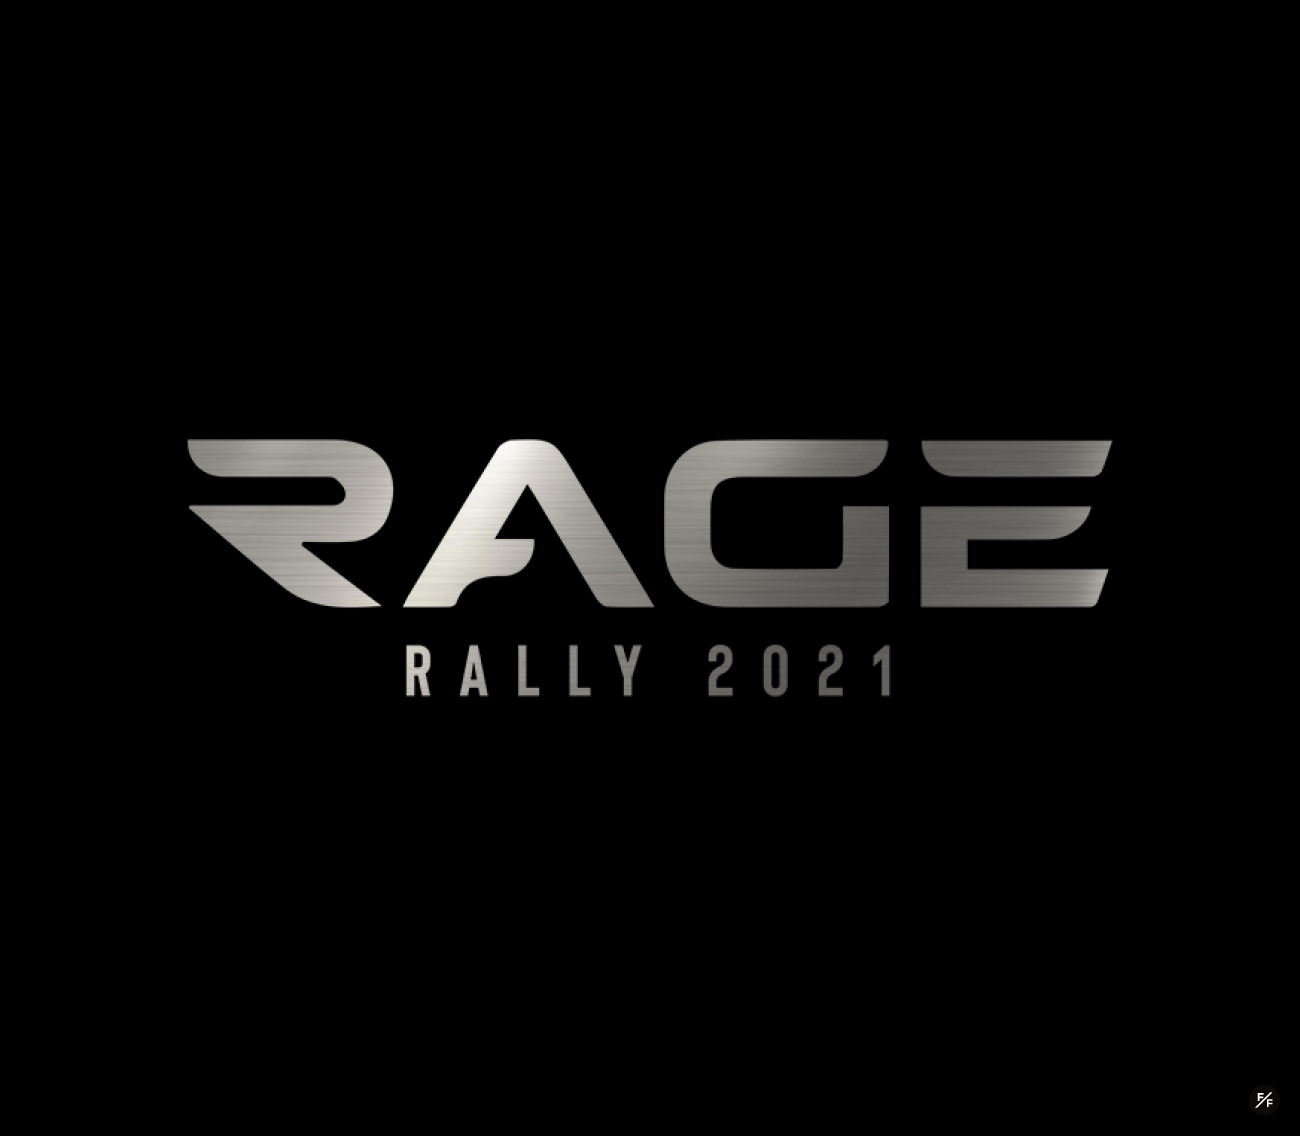 RAGE RALLY 2021